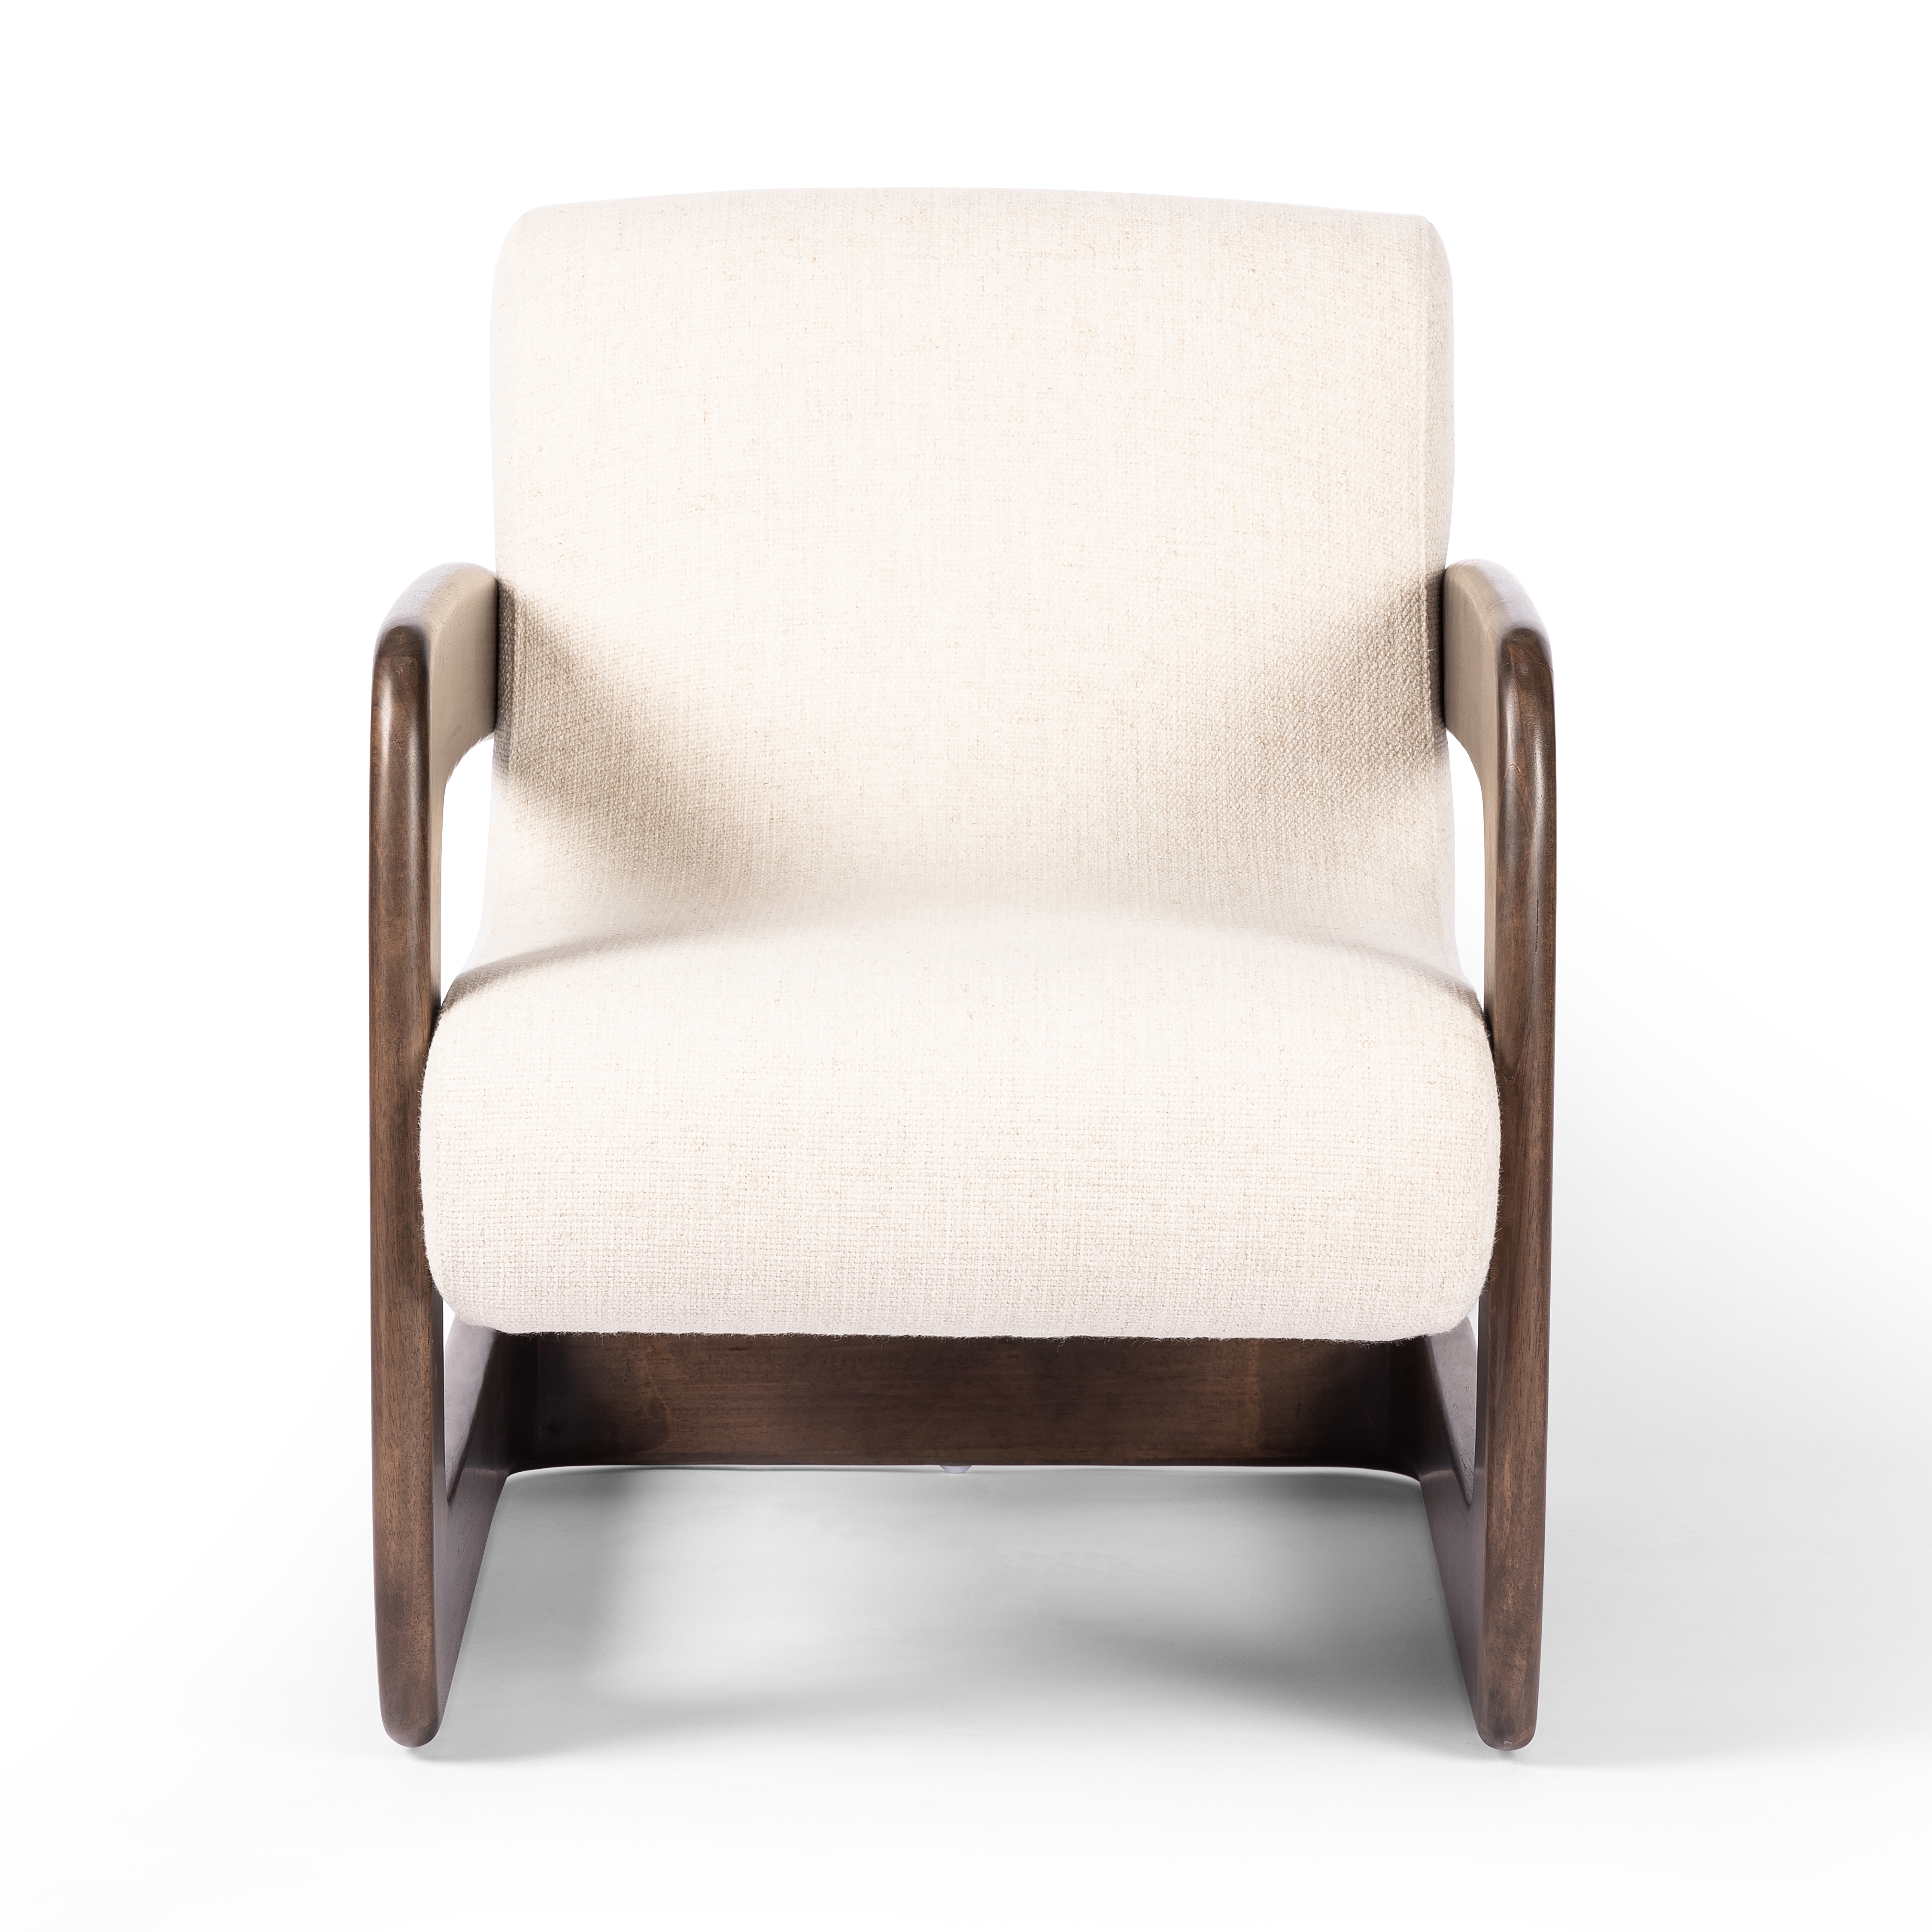 Kristoff Chair-Thames Cream - Image 3